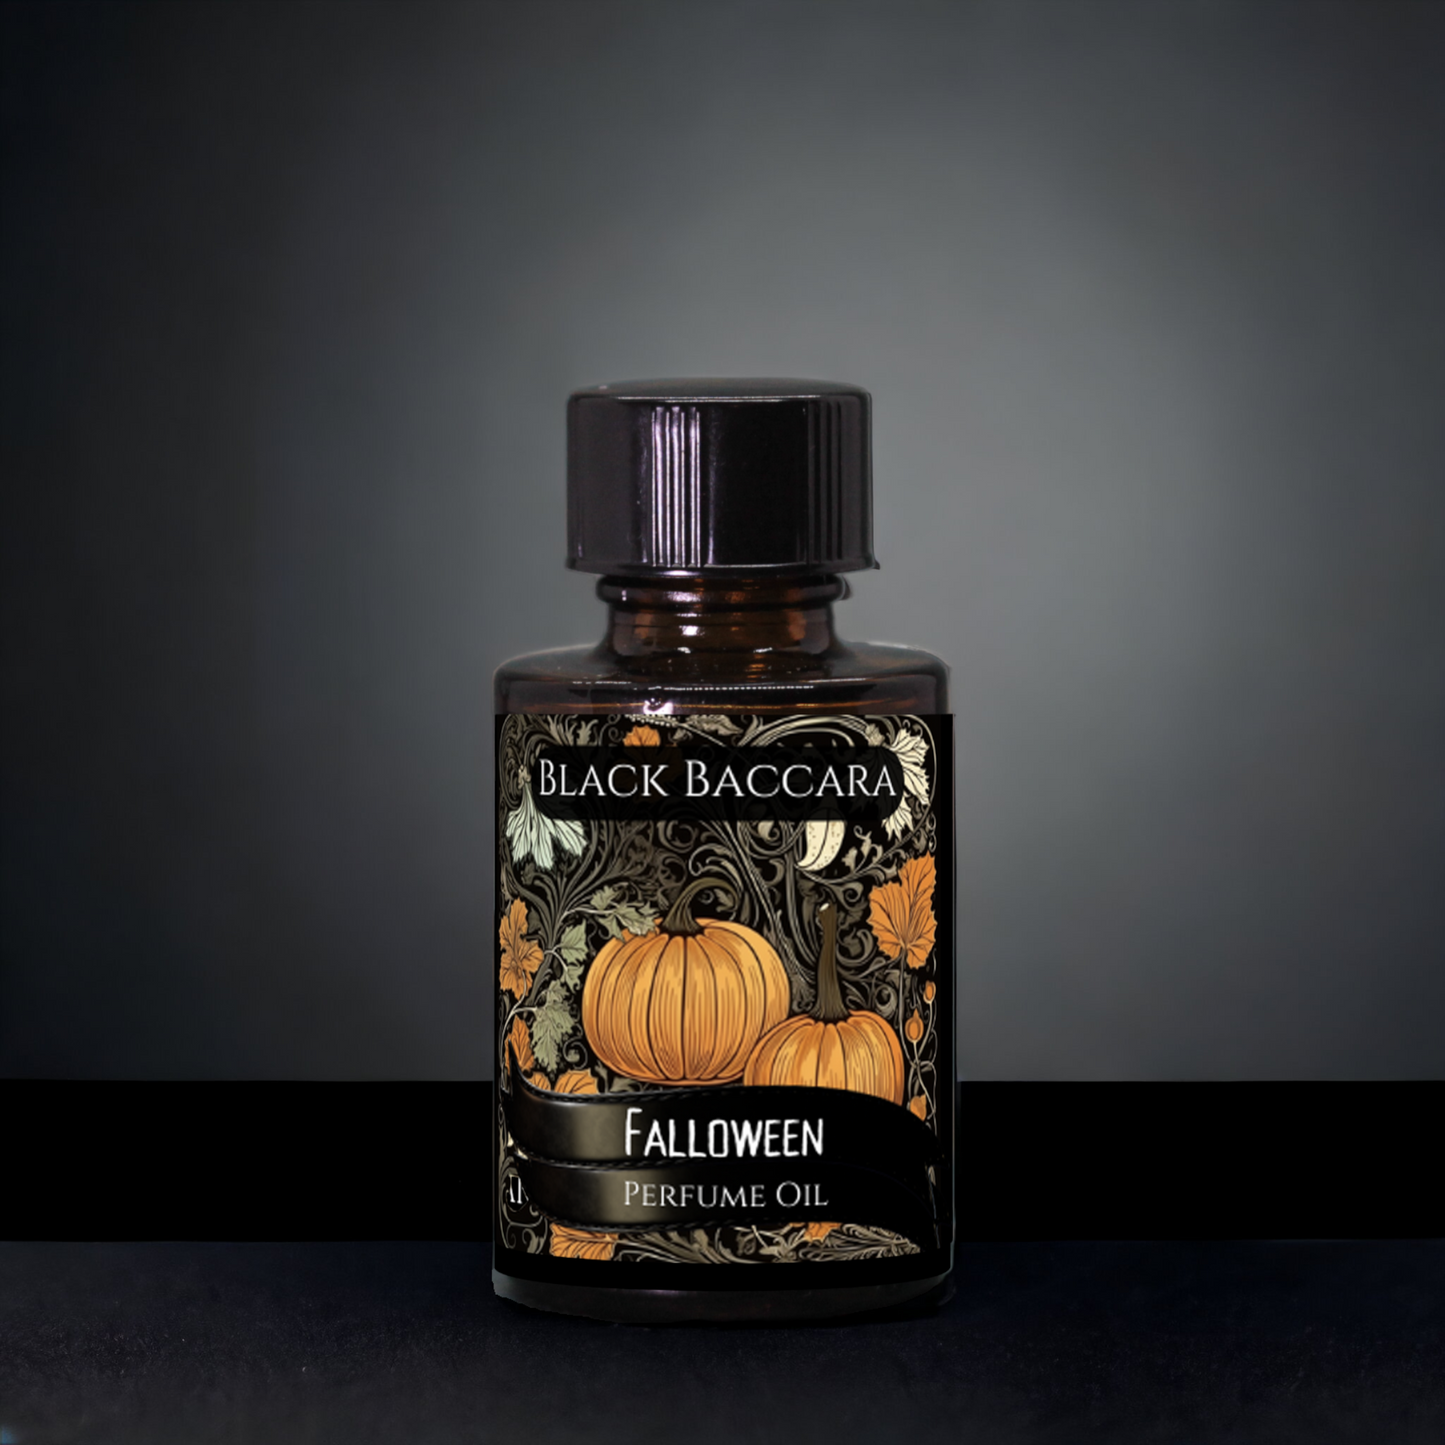 Falloween Perfume Oil And Eau de Parfum